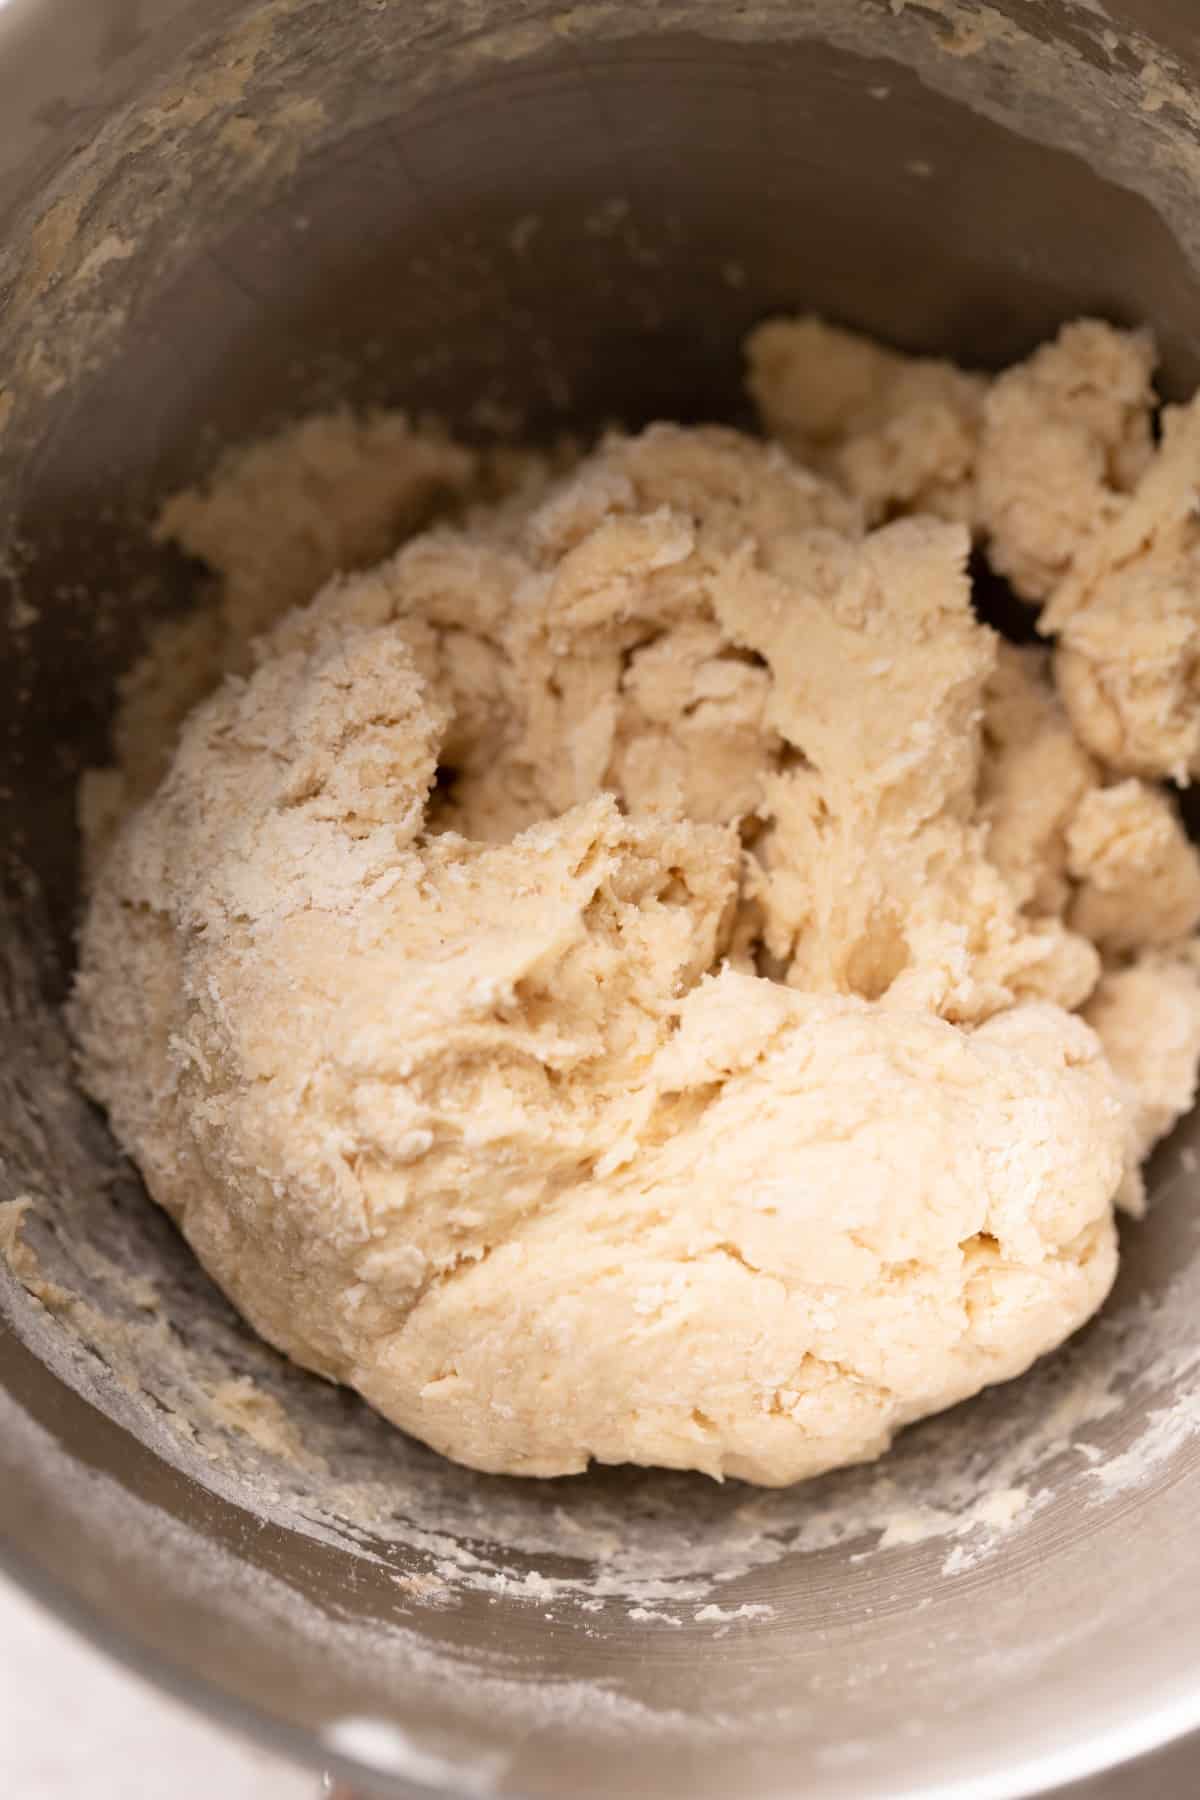 shaggy dough ball in a mixing bowl.